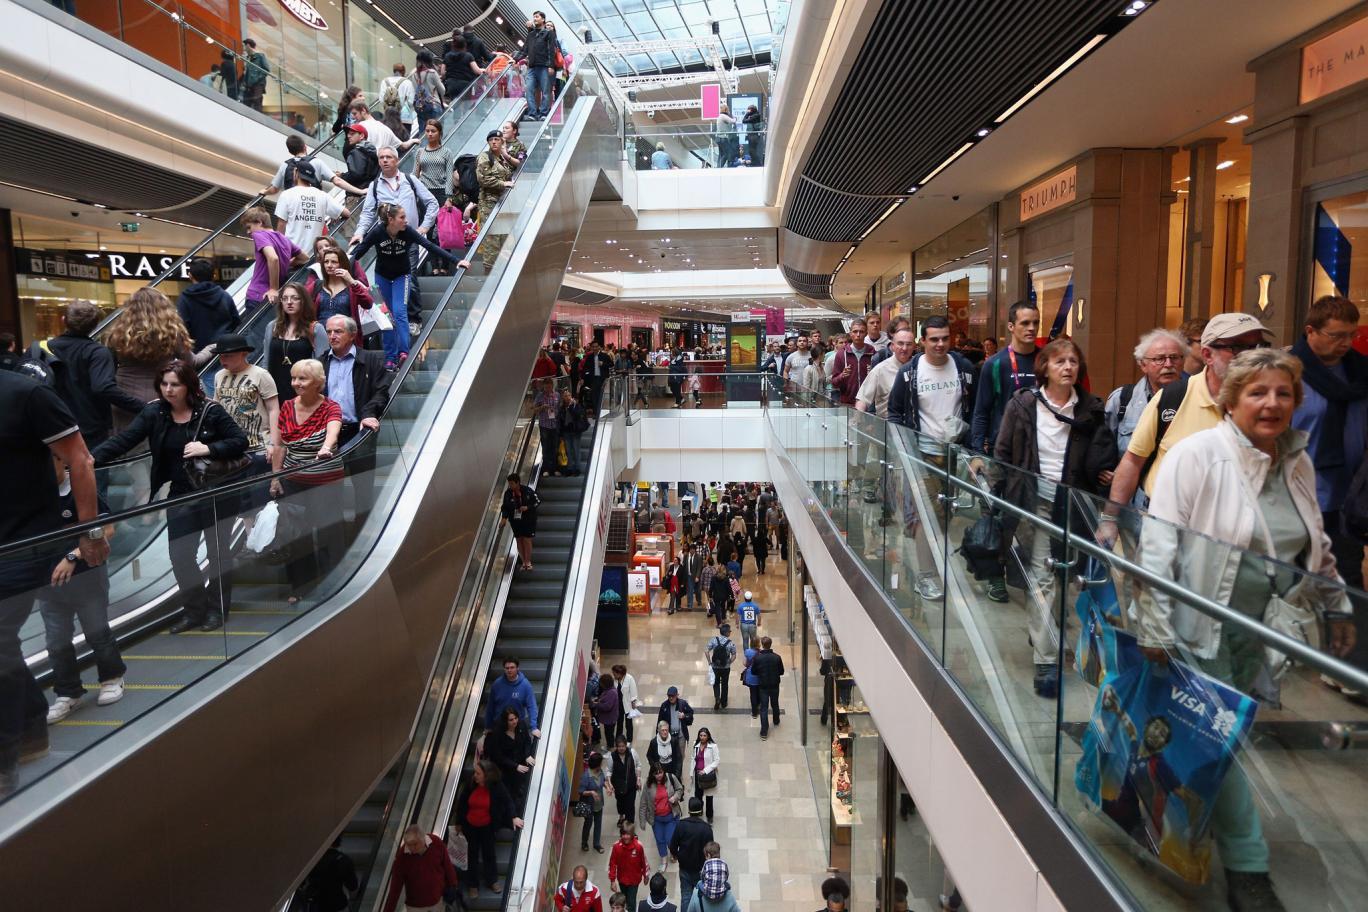 Retailers report booming trade as Black Friday dawns